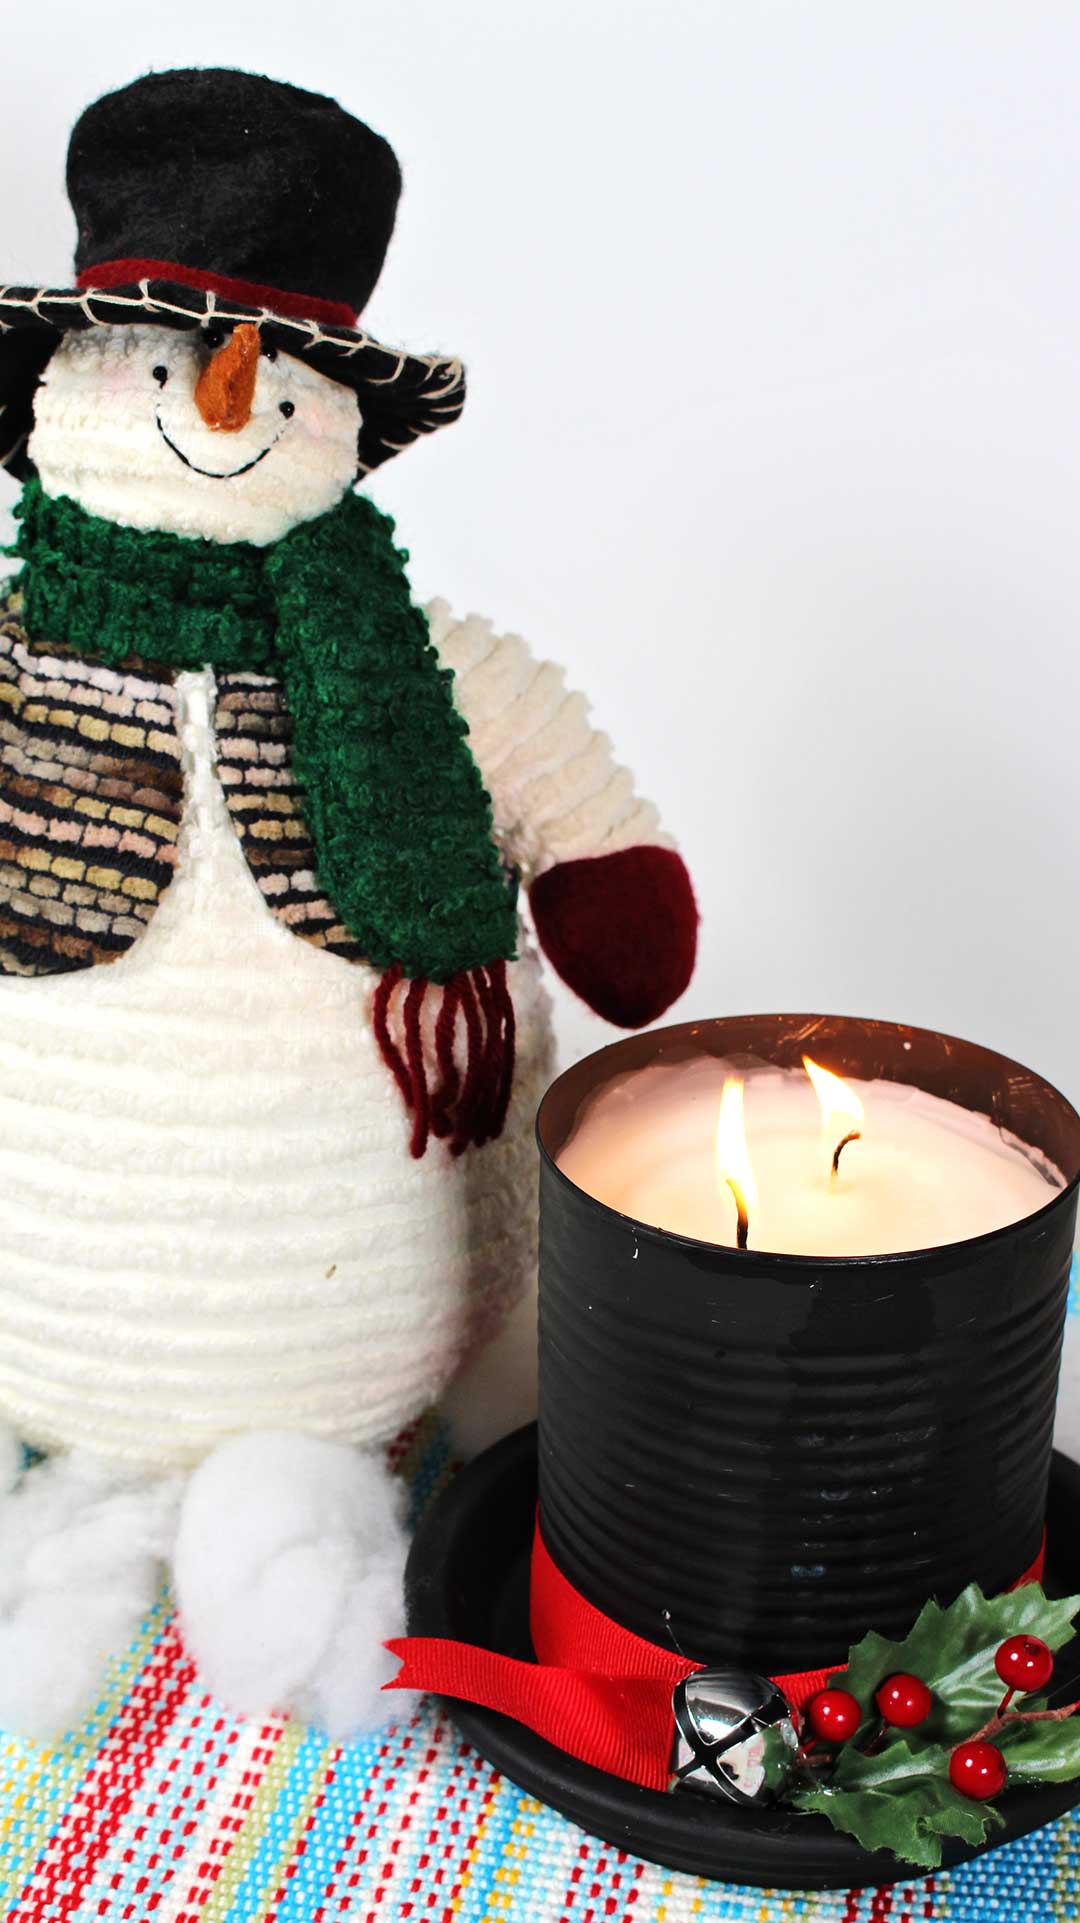 Stuffed snowman next to DIY Snowman Hat Candle